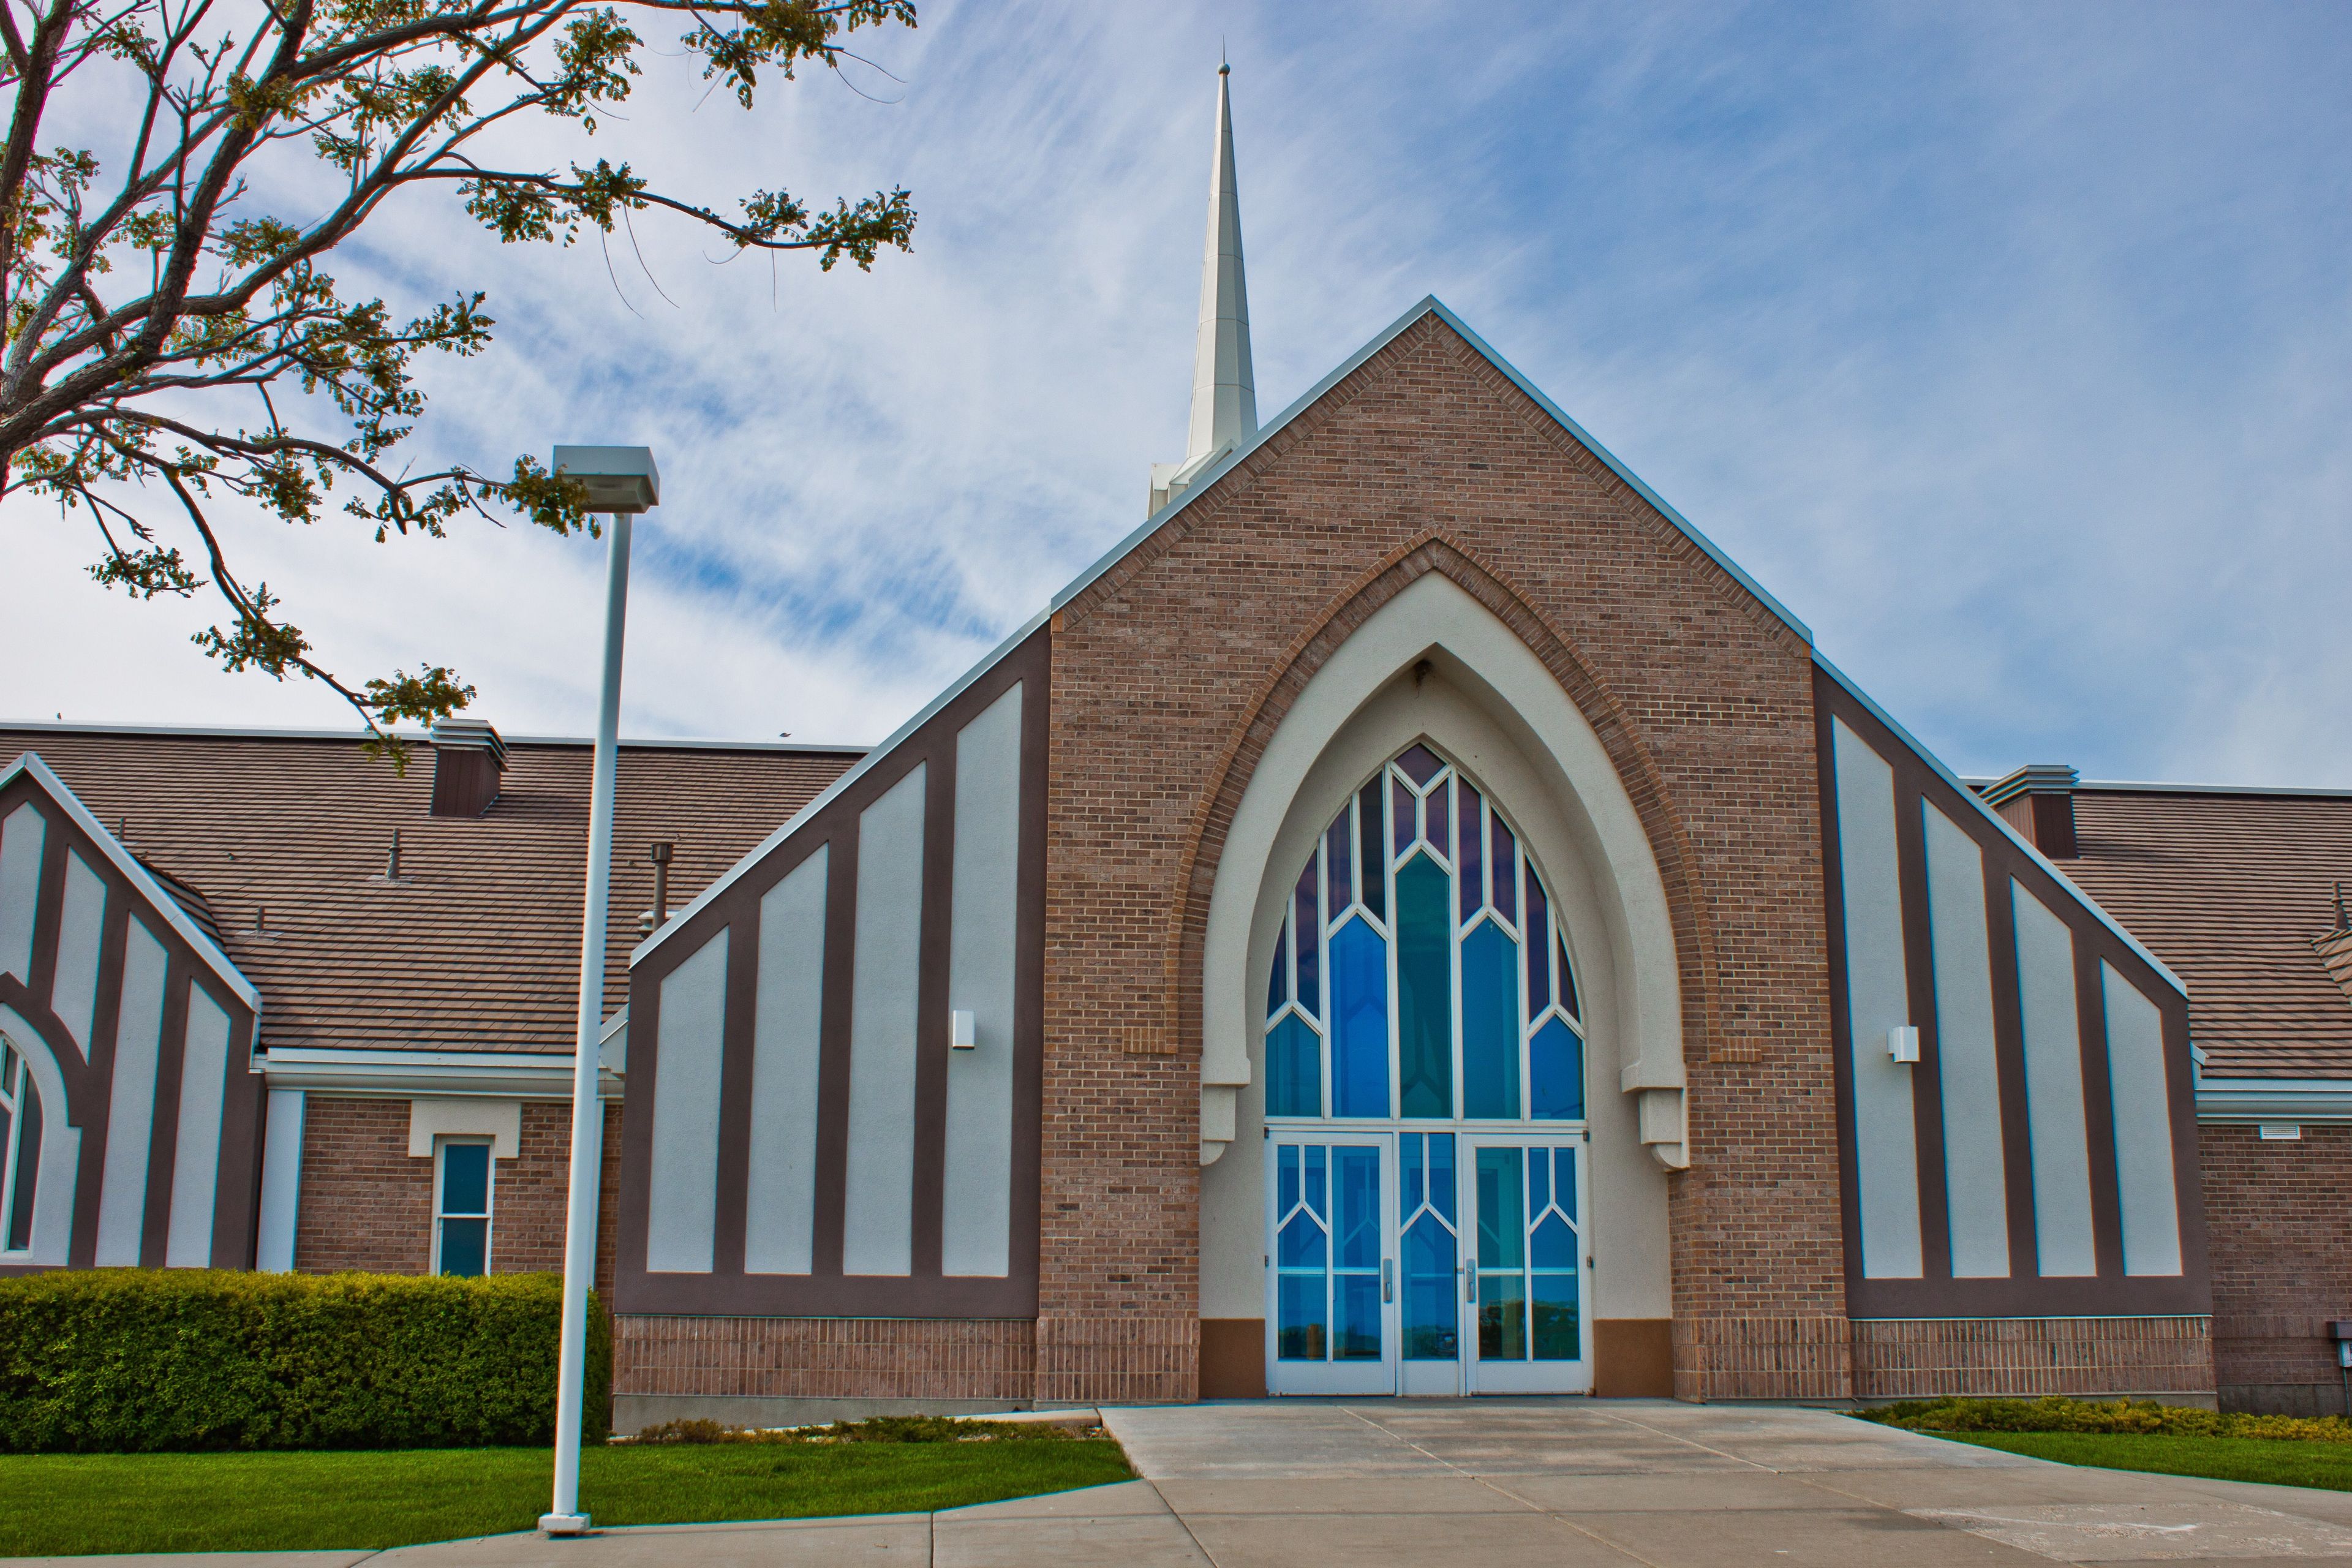 The front view of a chapel in Erda, Utah.